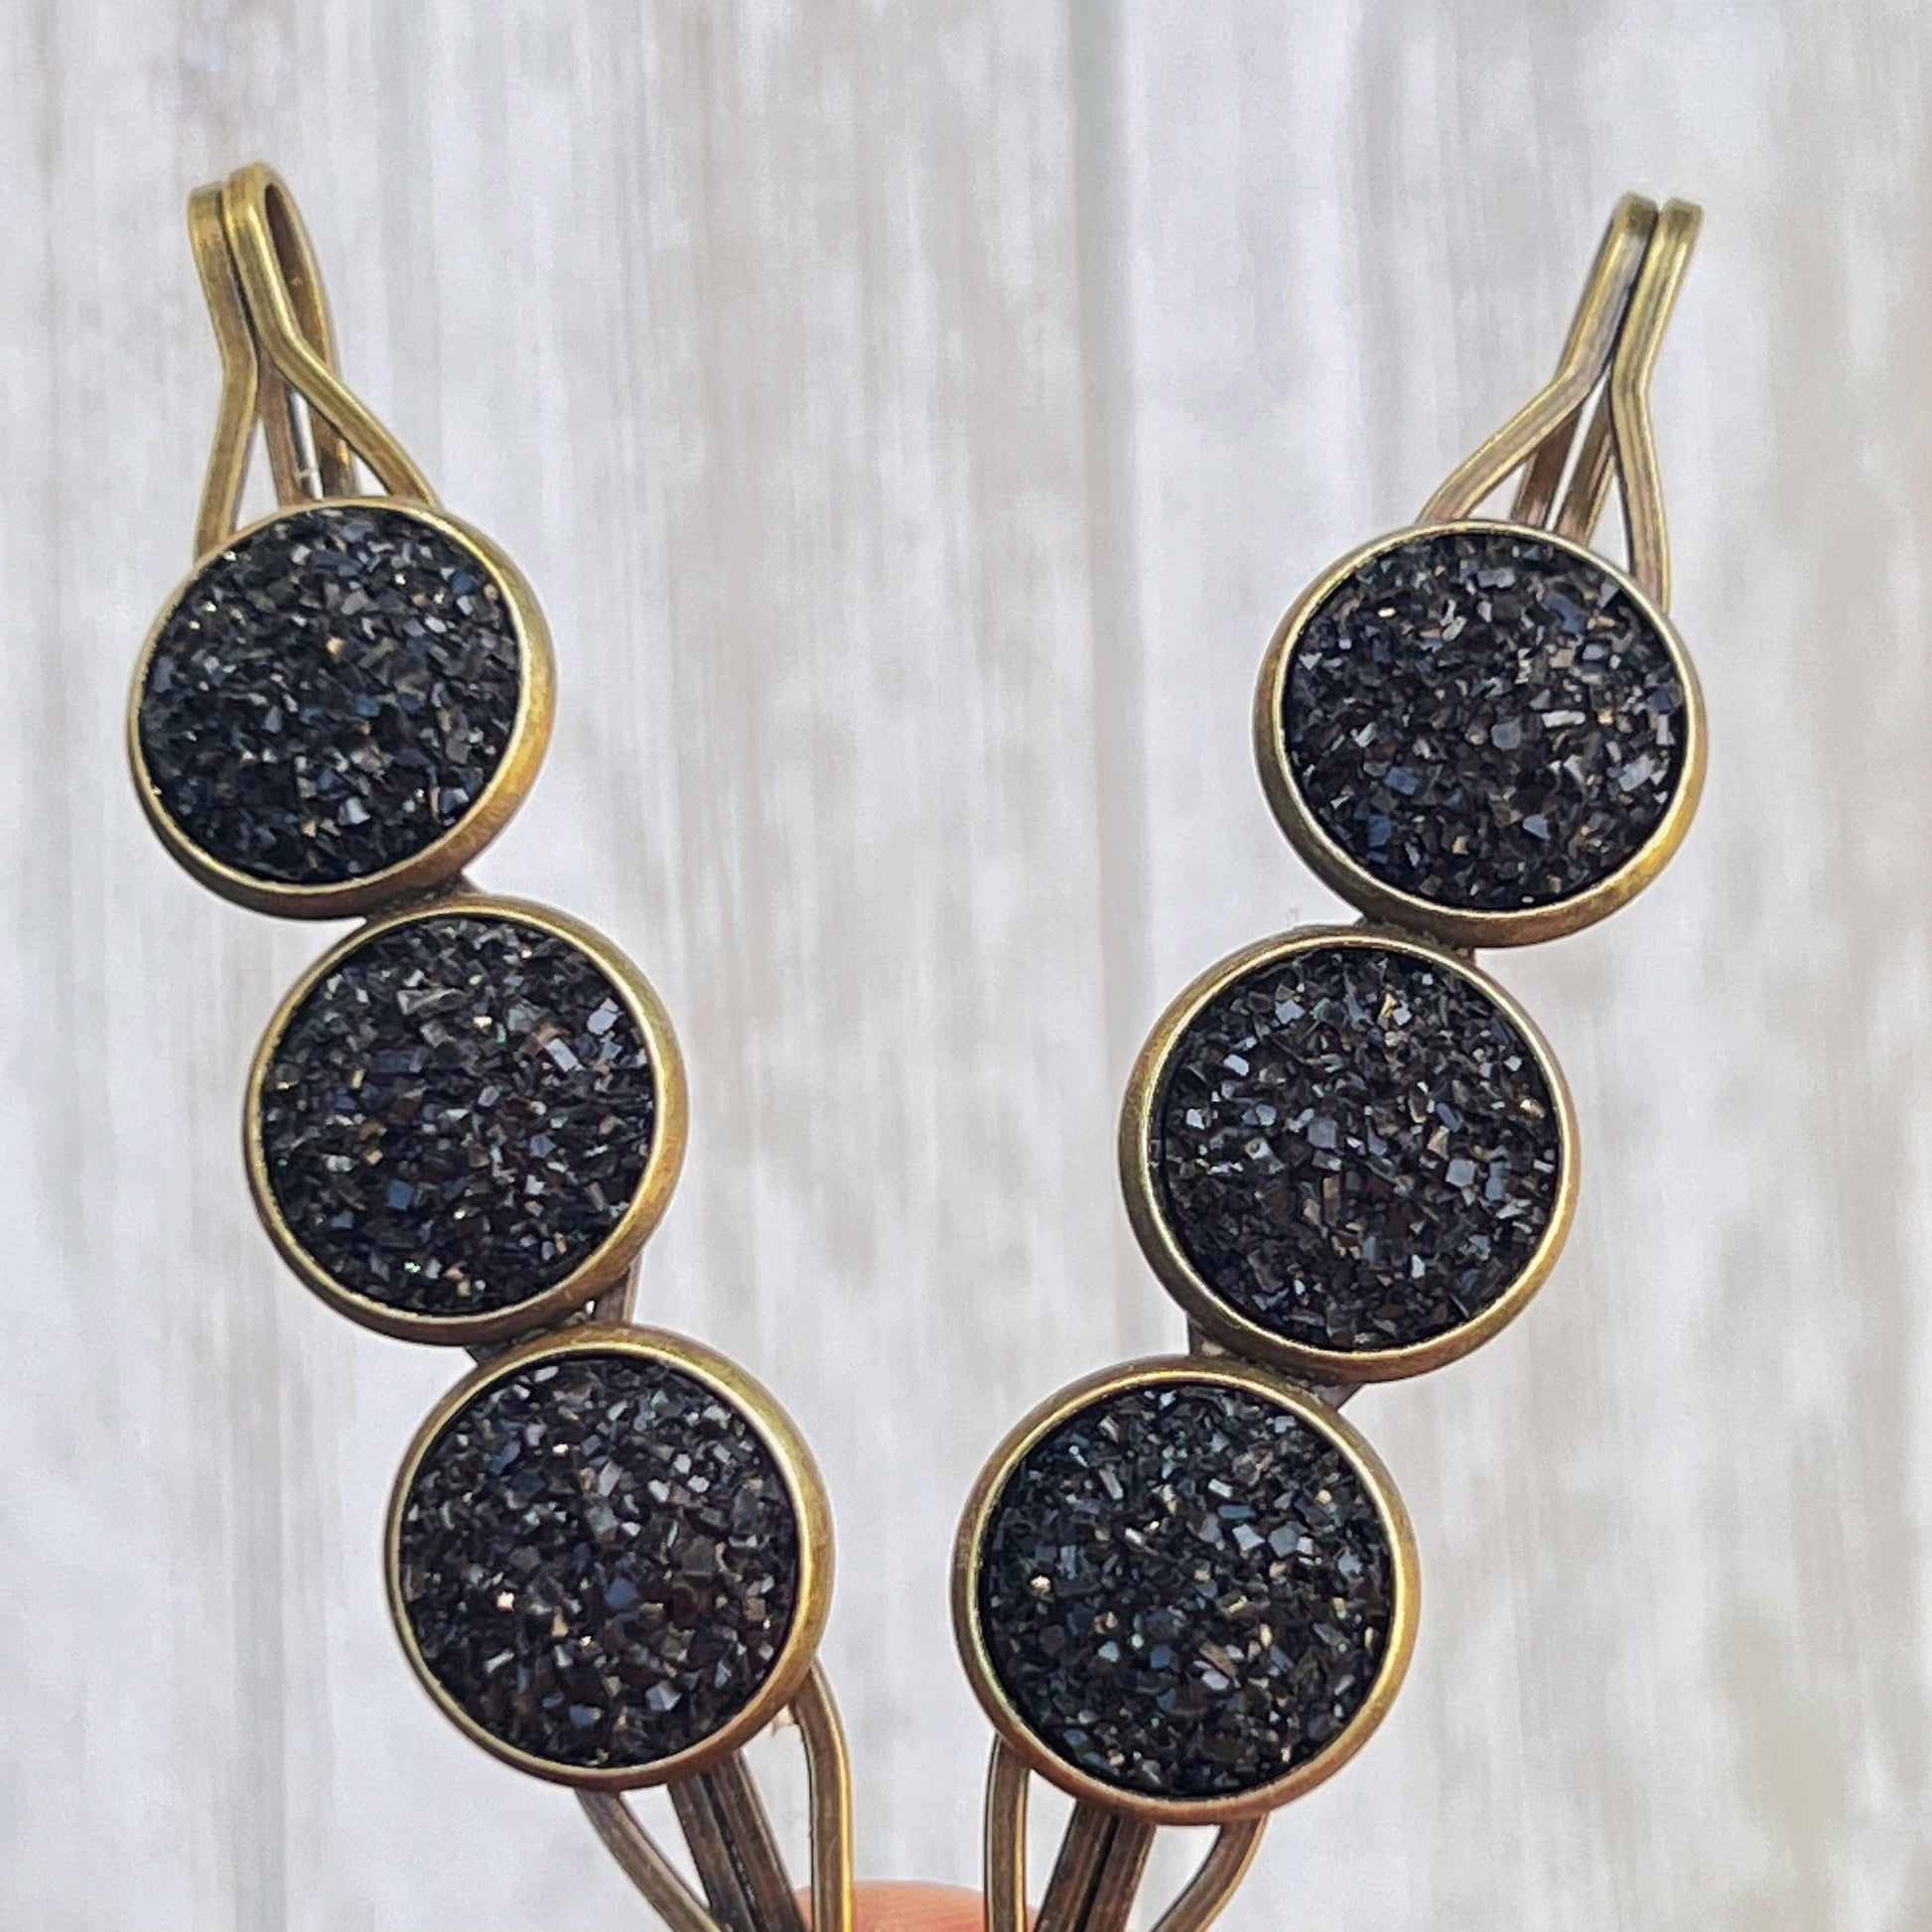 Black Druzy Hair Pins - Chic Women's Hair Accessories - Cute Bobby Pins for Stylish Looks